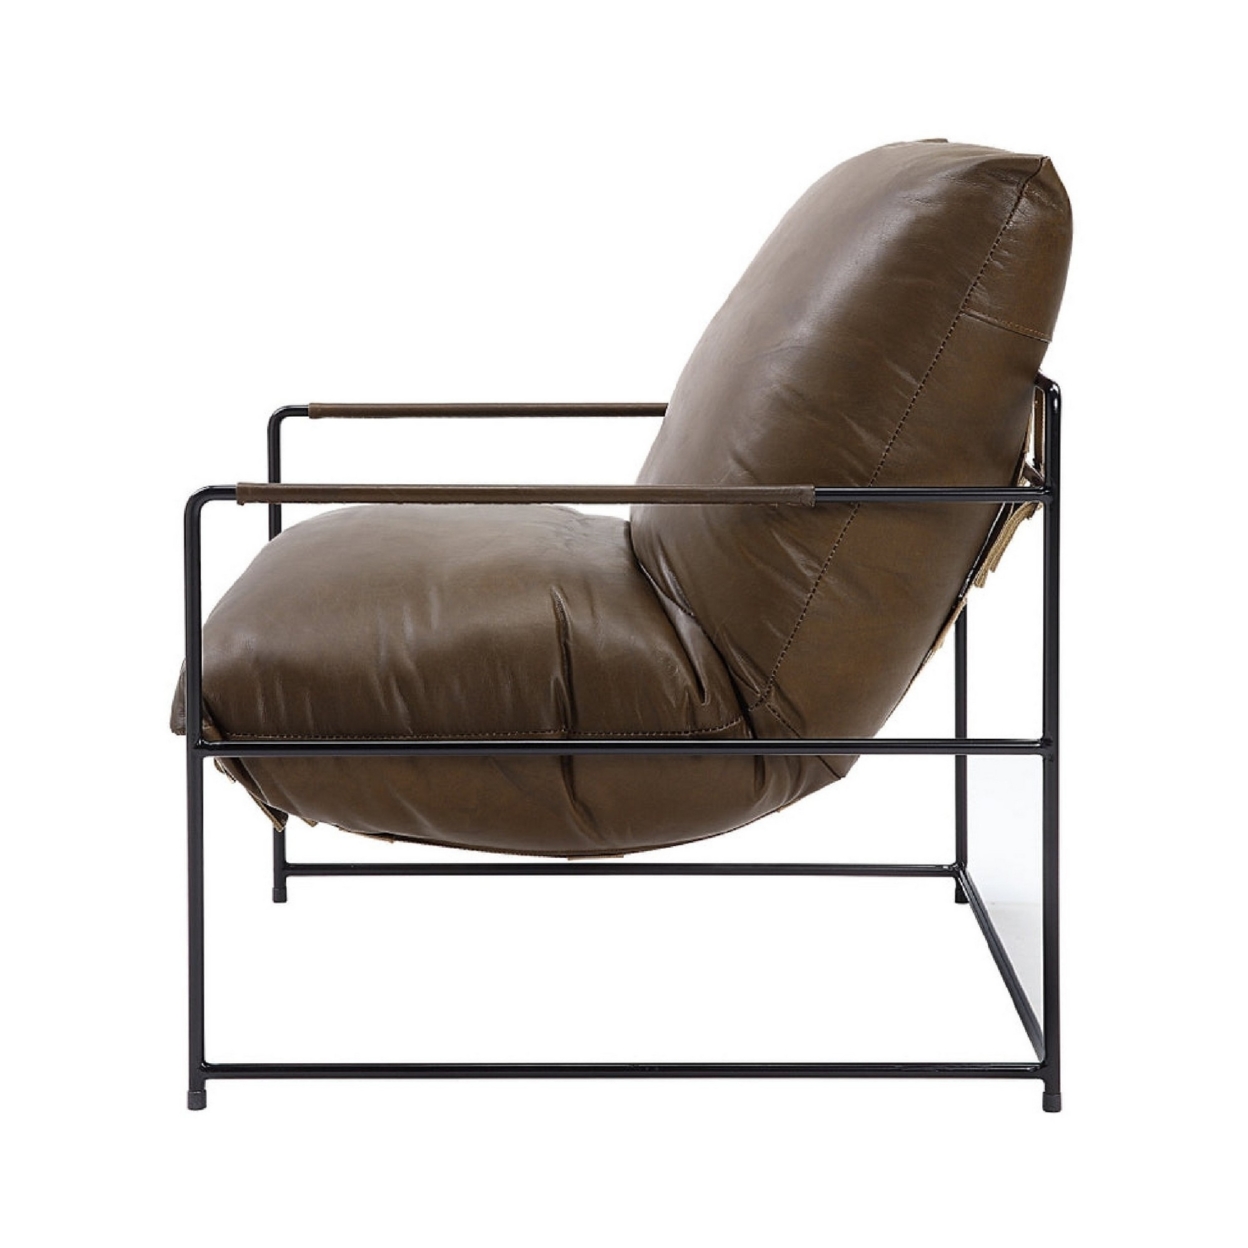 Tim 32 Inch Accent Chair, Top Grain Leather Seat, Metal Frame, Brown- Saltoro Sherpi